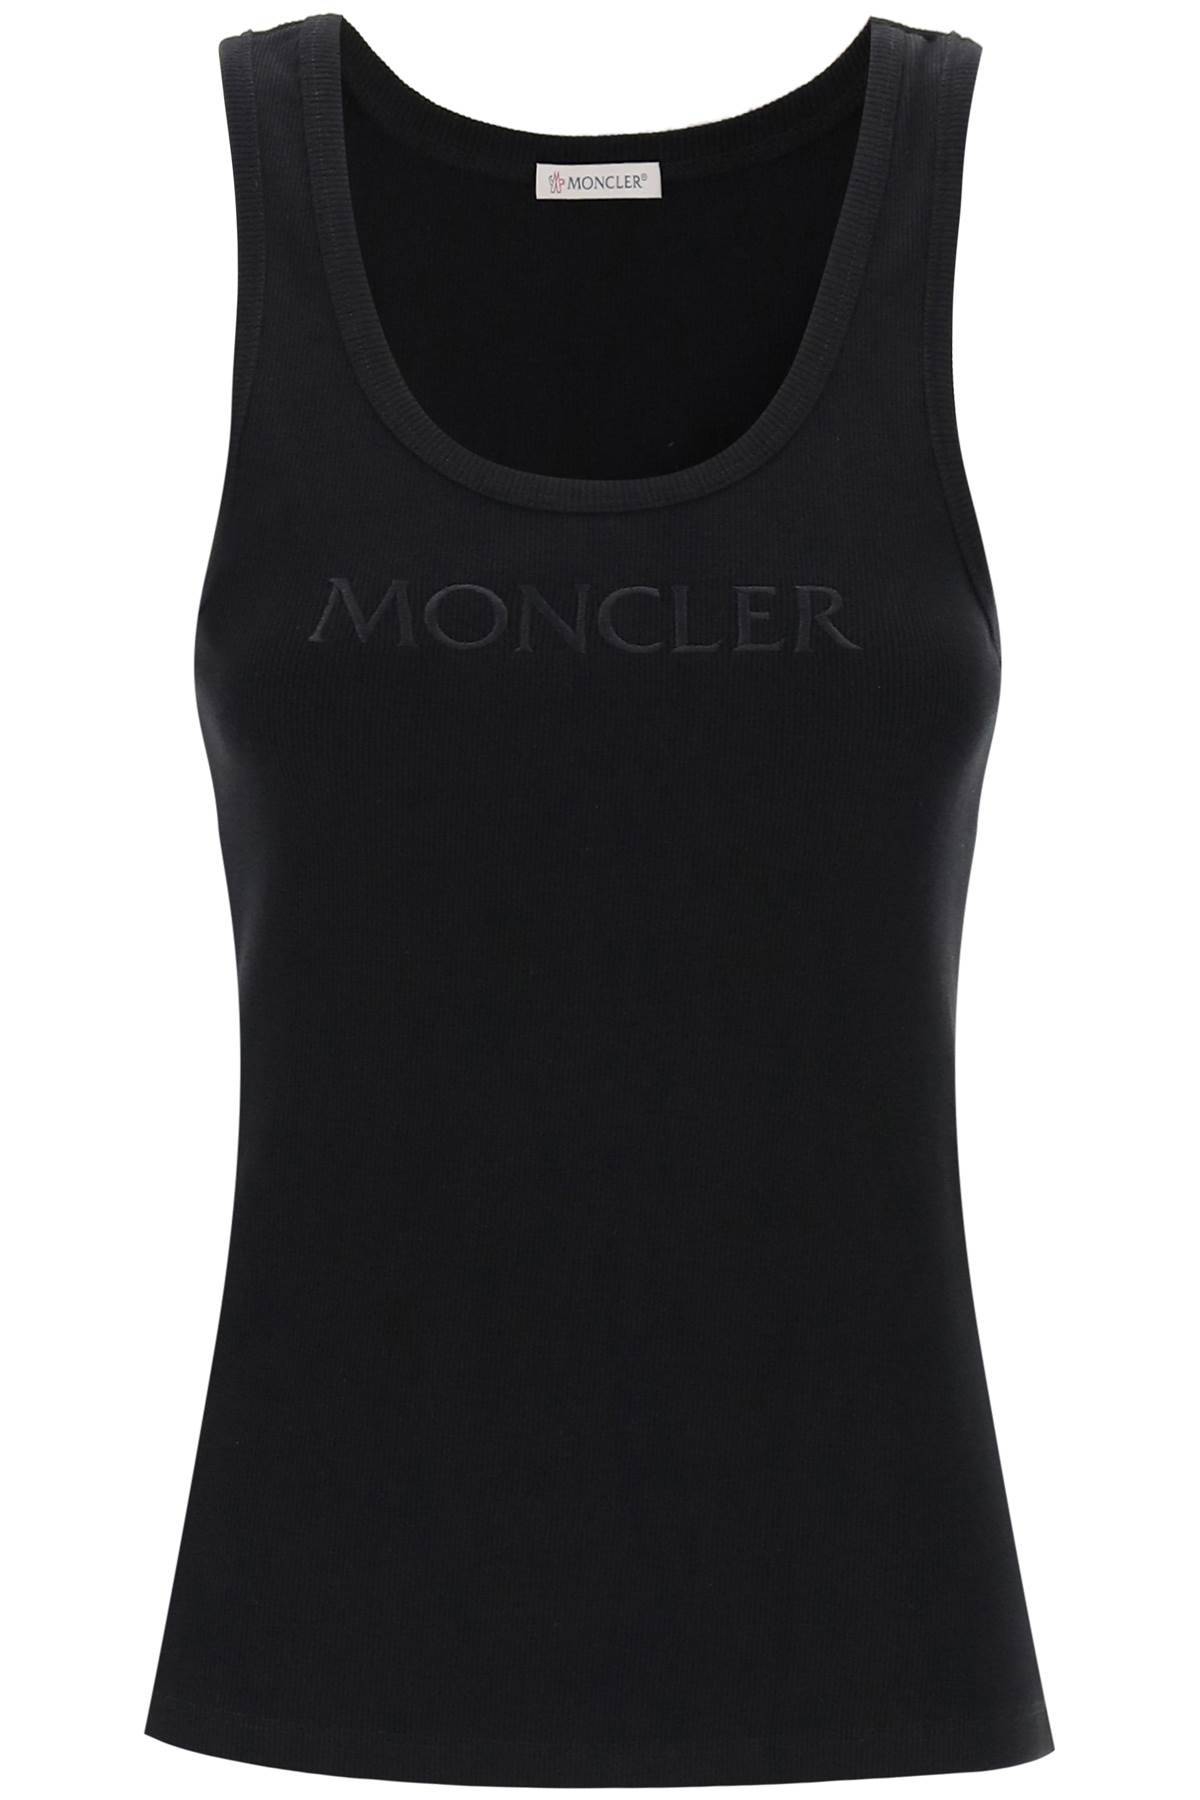 Moncler MONCLER sleeveless ribbed jersey top